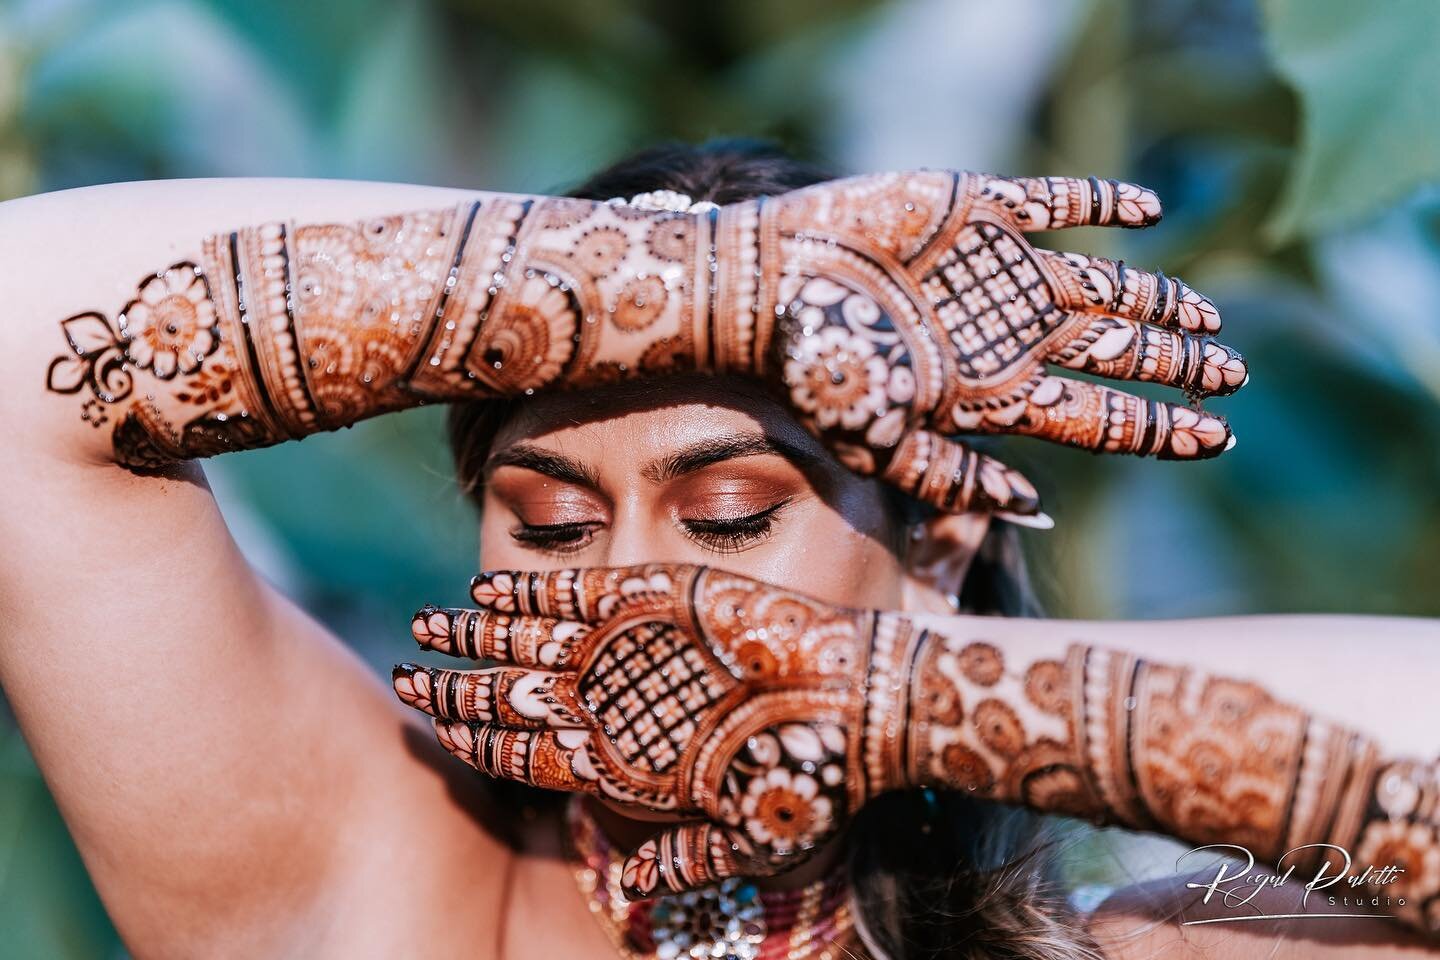 Akshay + Bindi Wedding Series | Mehndi Night 

The start of the wedding celebrations 🎉

.
. 
.
#TumHiHoEvents #THH #indianweddingplanner #indianwedding #indianweddings #desiwedding #desiweddings #southasianweddings #southasianwedding #indianbrides #